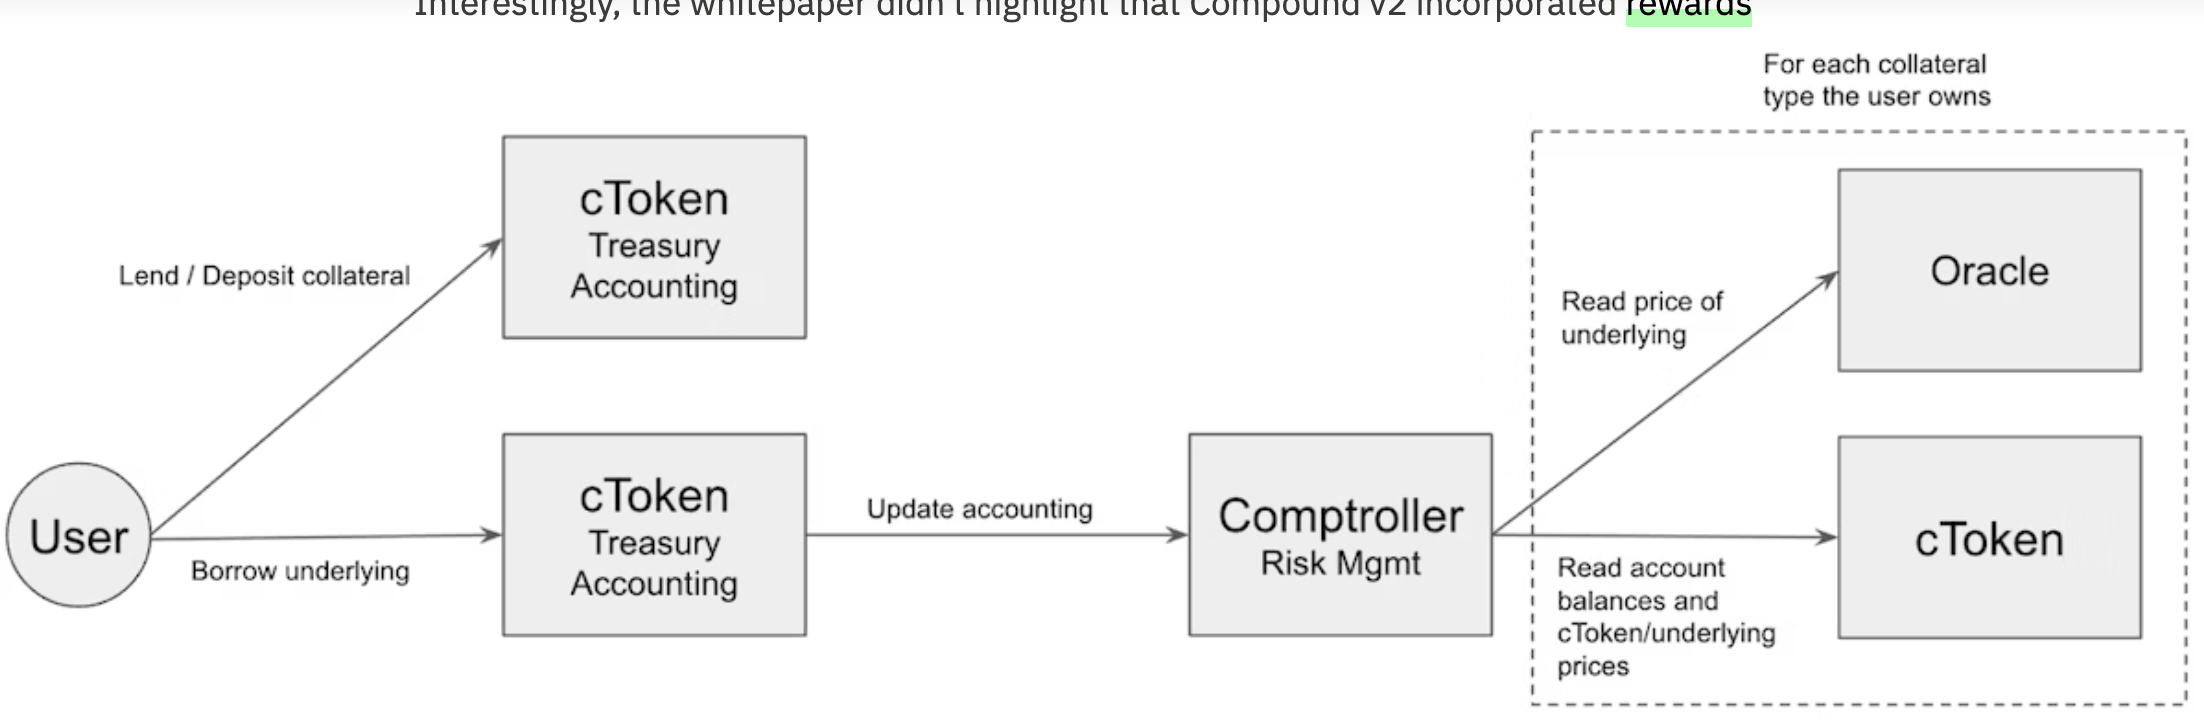 Compound v2 中的借用过程。首次涉足代币化借贷头寸